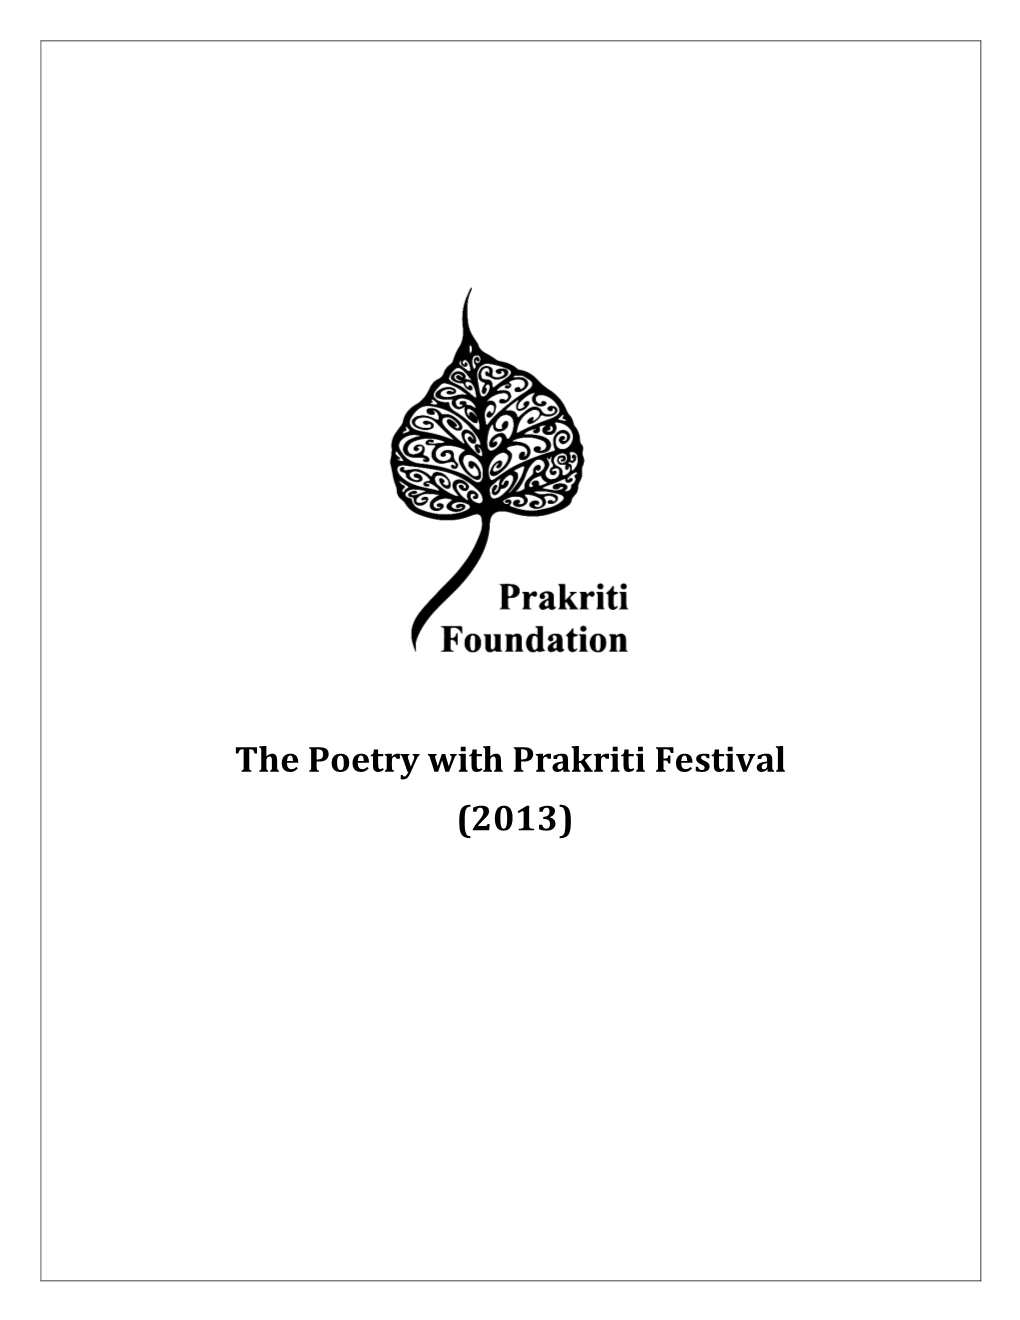 The Poetry with Prakriti Festival (2013)